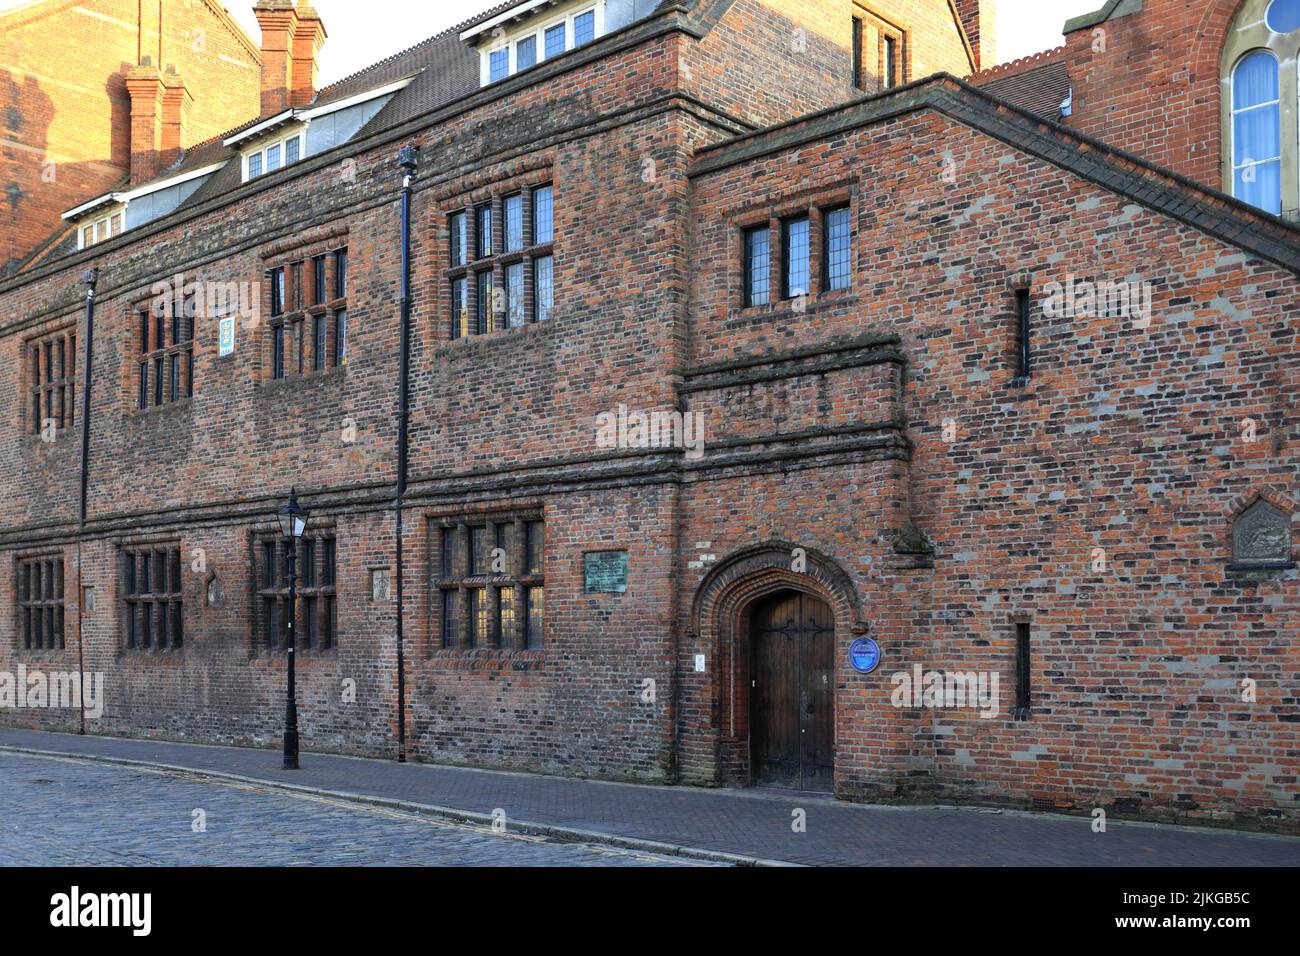 The Old Gramma School, Fish Street, Kingston-upon-Hull, East Riding of Yorkshire, Humberside, England, UK Stock Photo